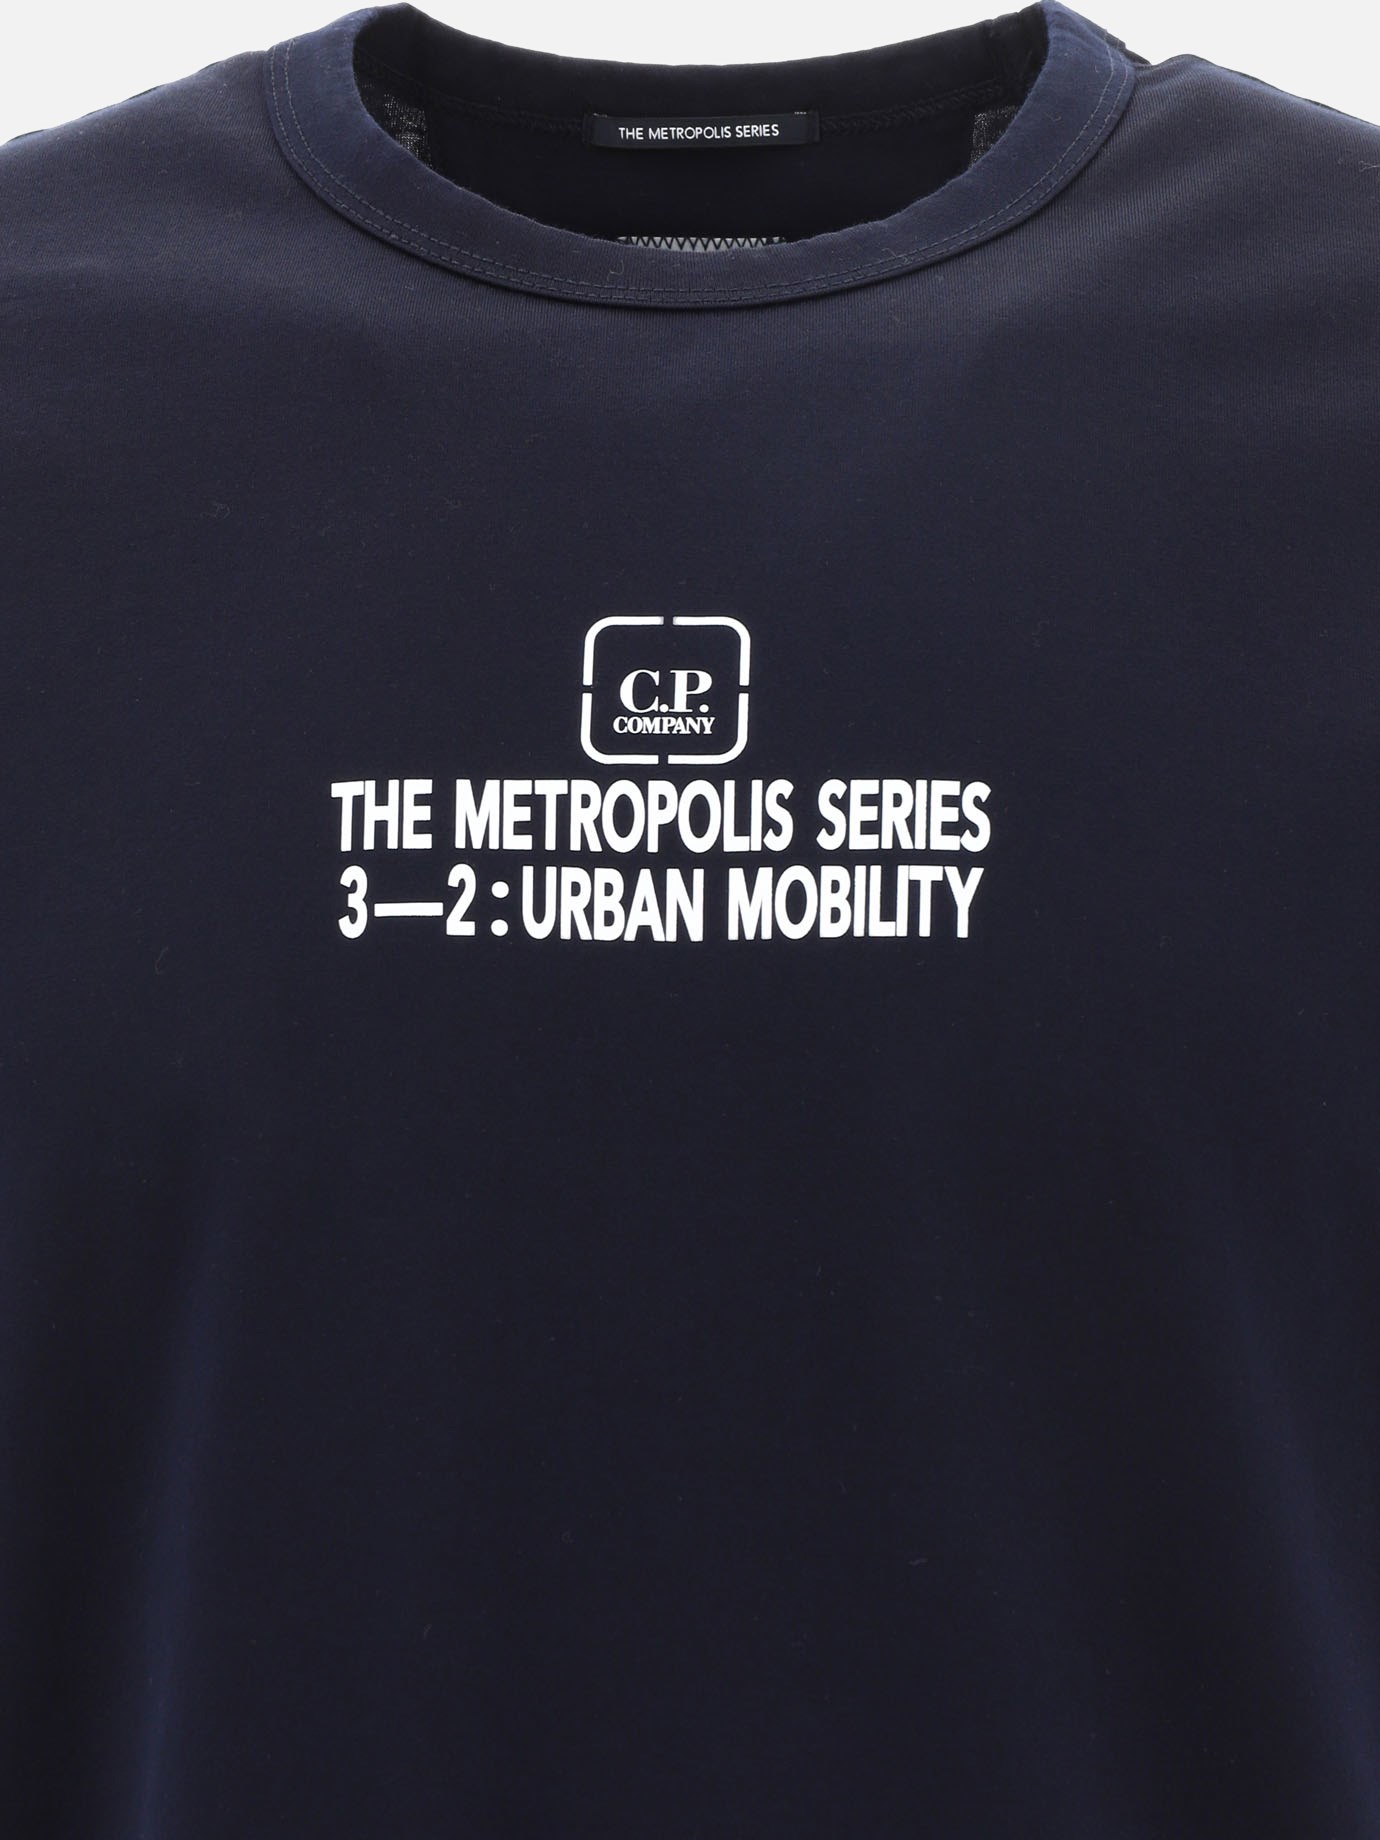 T-shirt  Metropolis Series  by C.P. Company